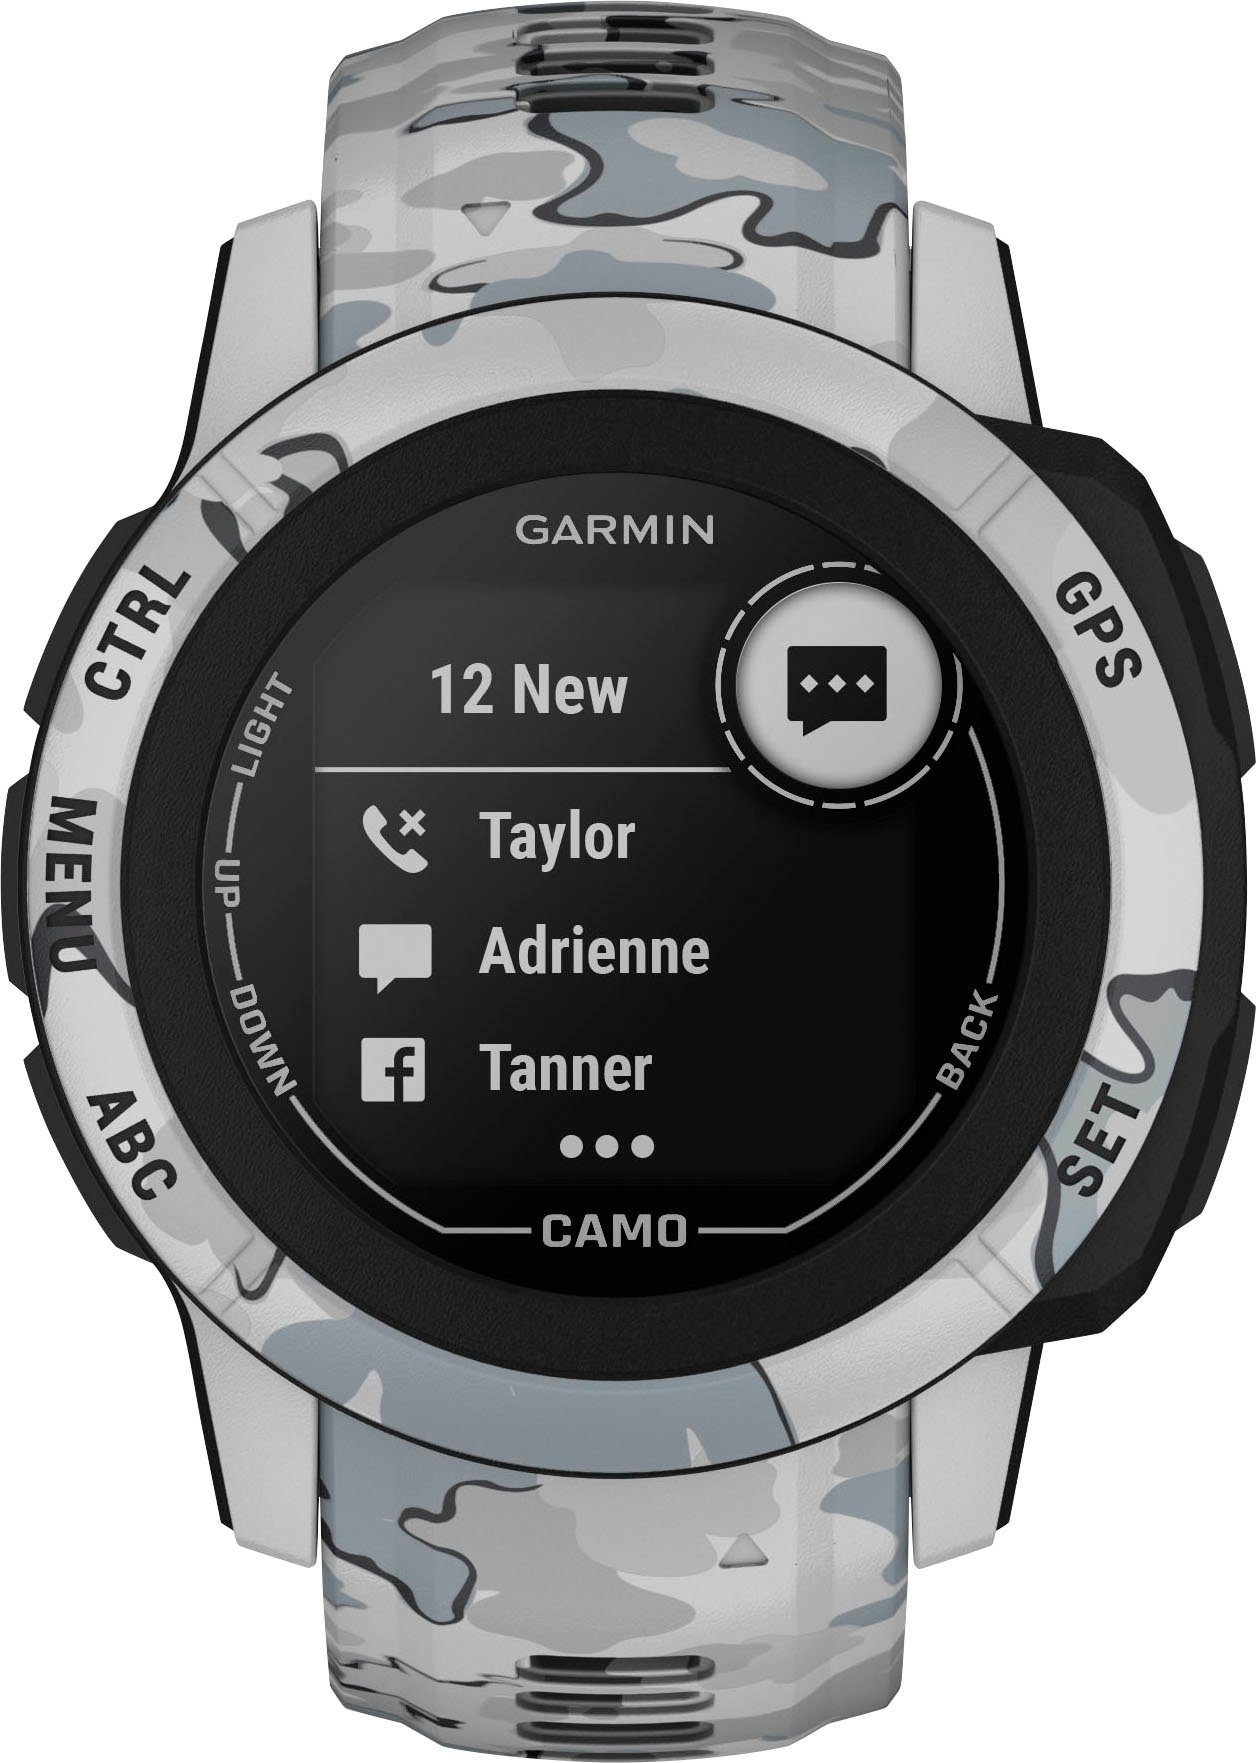 CAMO cm/0,79 INSTINCT Zoll, Smartwatch EDITION 2S Garmin Garmin) (2,1